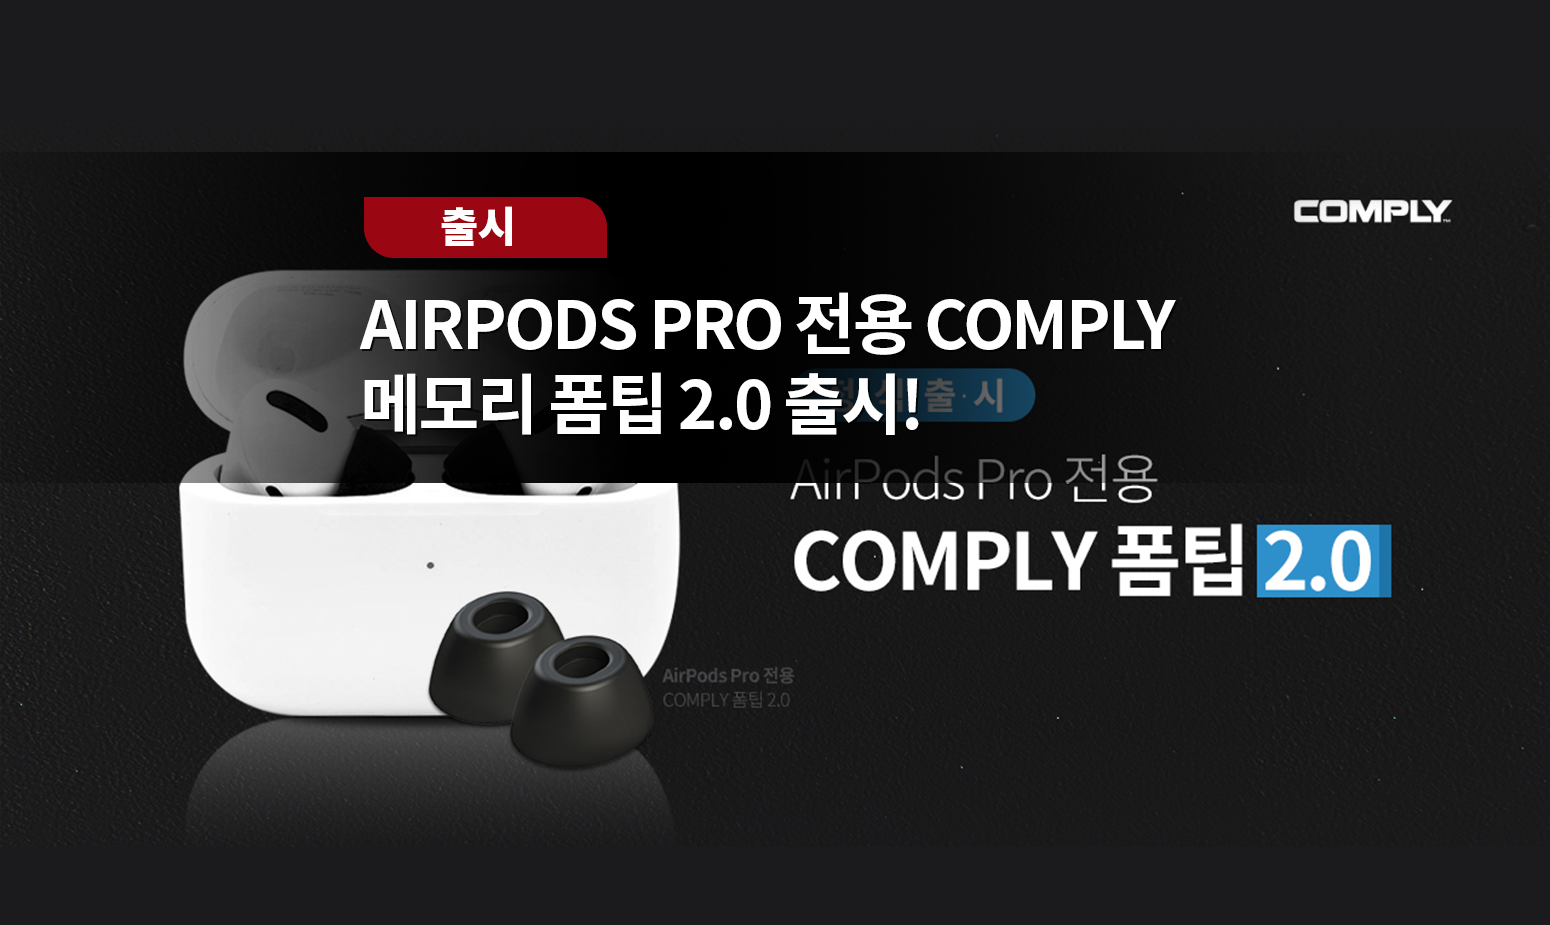 AirPods Pro 전용 COMPLY 메모리 폼팁 2.0 출시! - 사운드캣